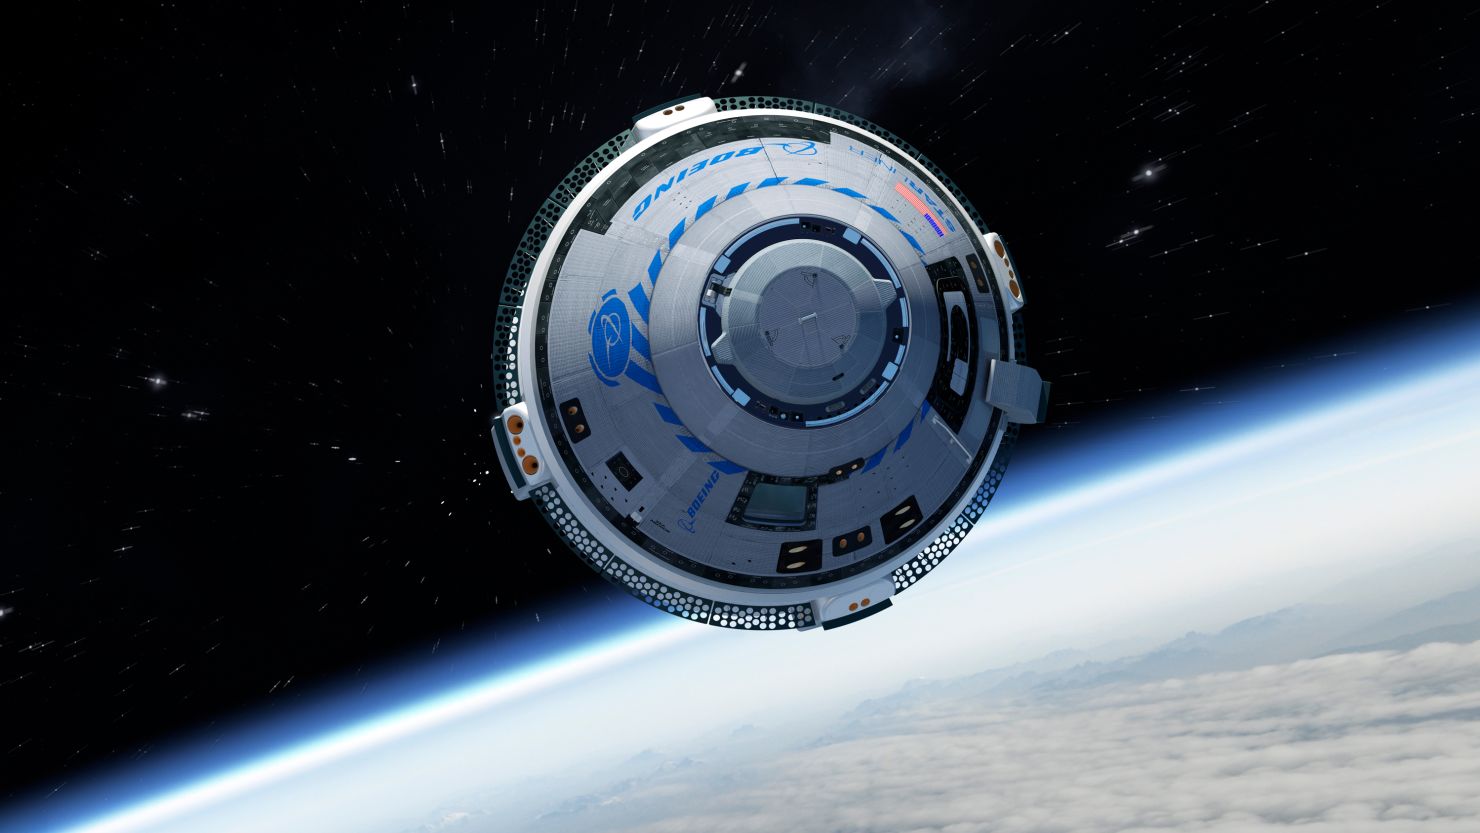 Boeing: Στην τελική ευθεία για το διάστημα – Τι αναμένει η NASA από το Starliner